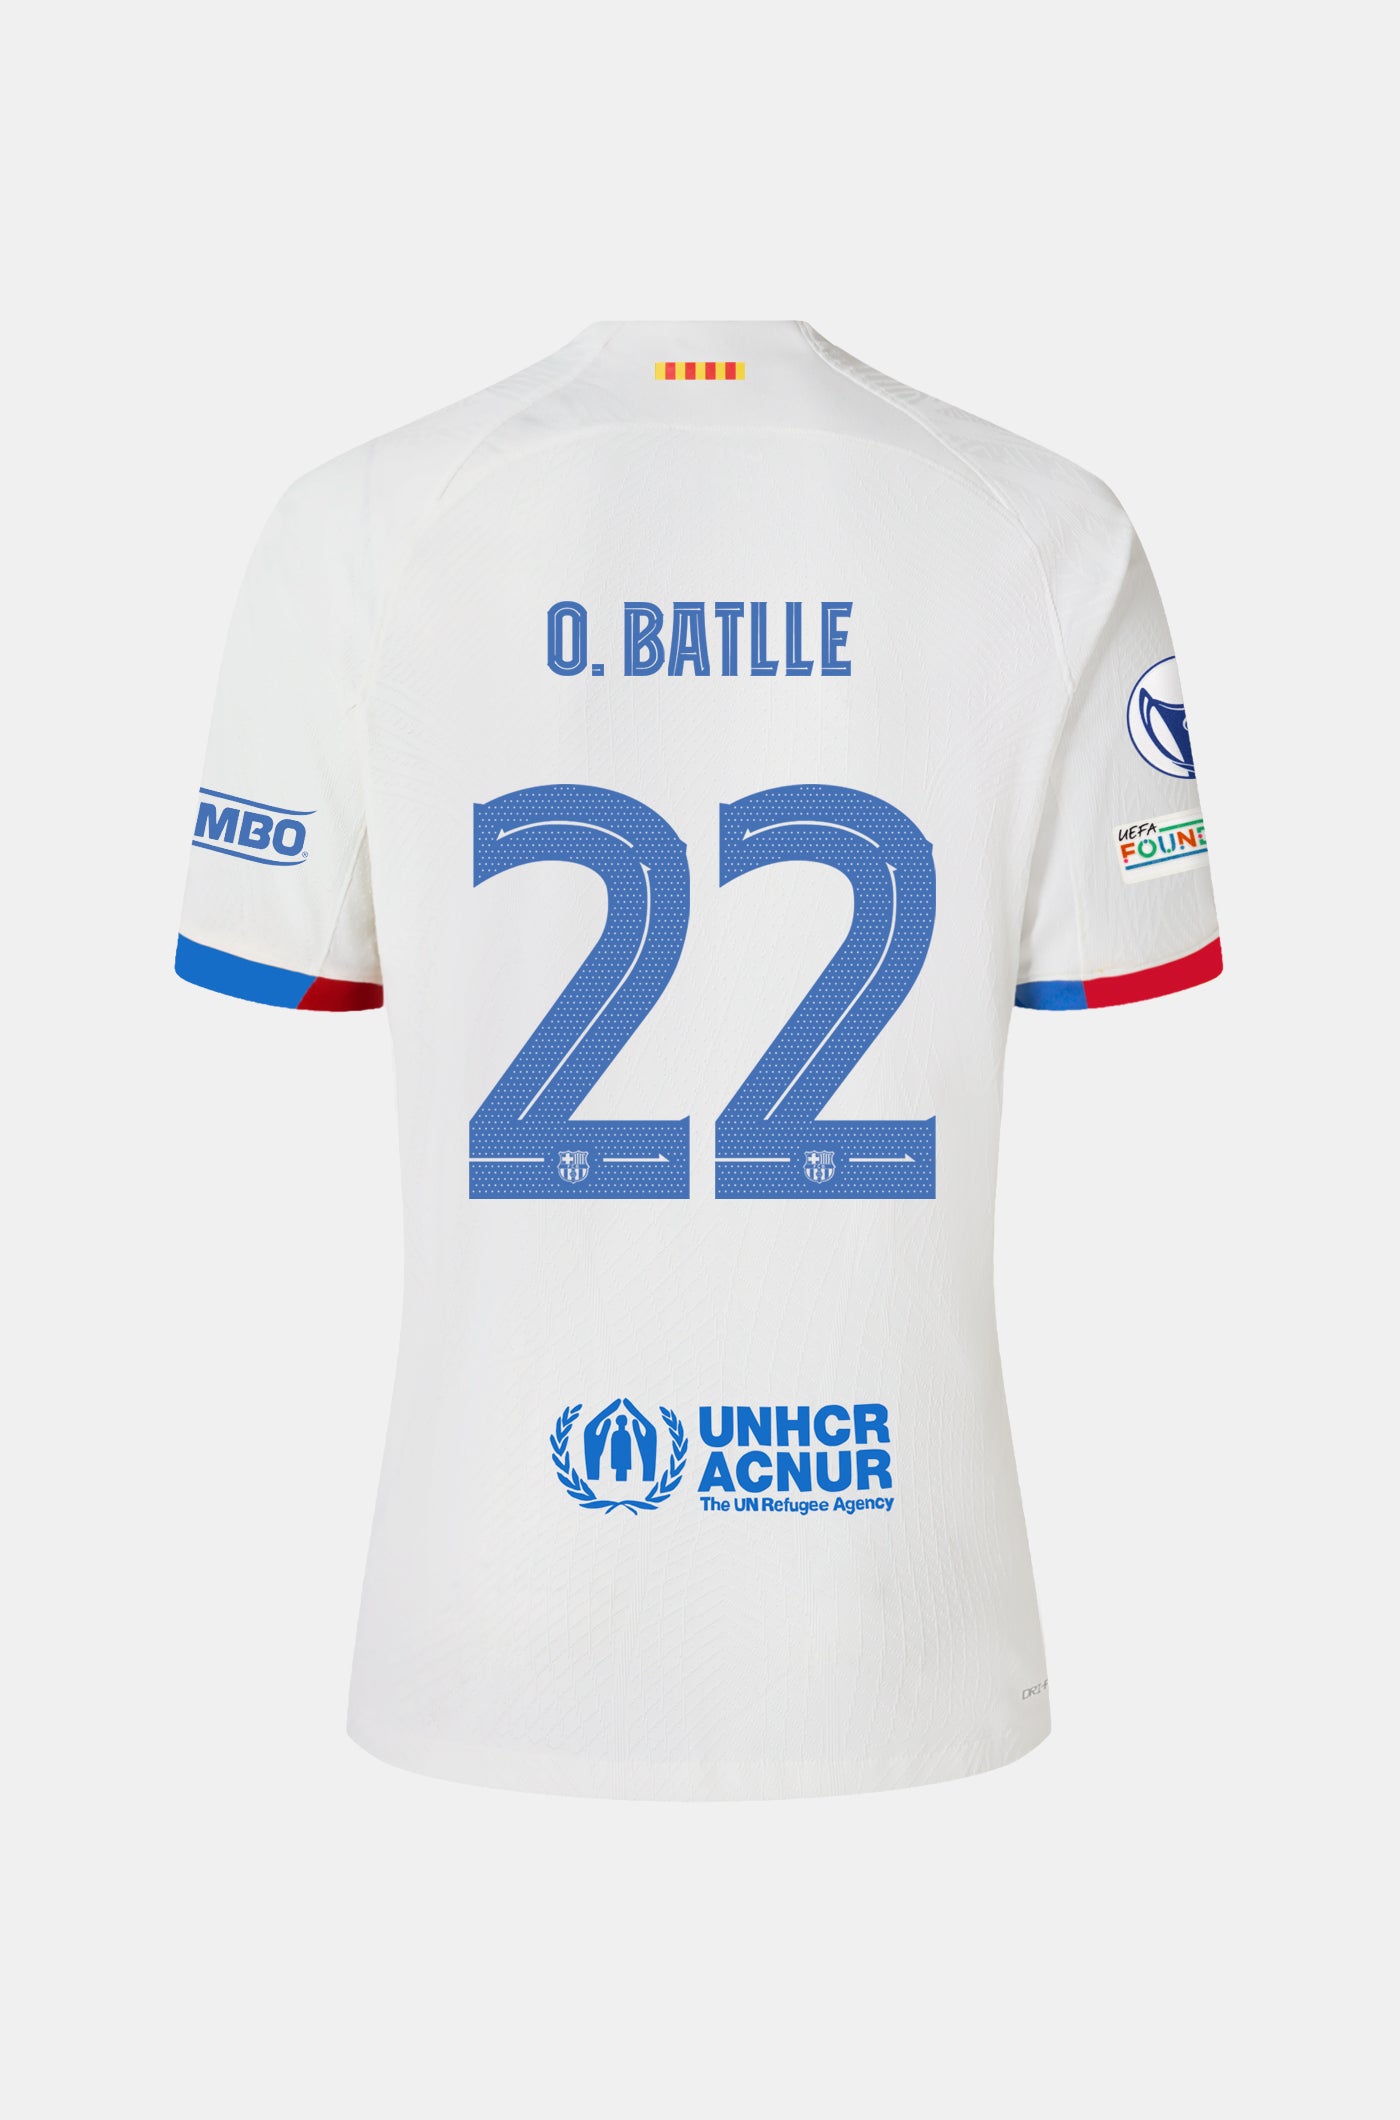 UWCL FC Barcelona away shirt 23/24 - Women  - O. BATLLE